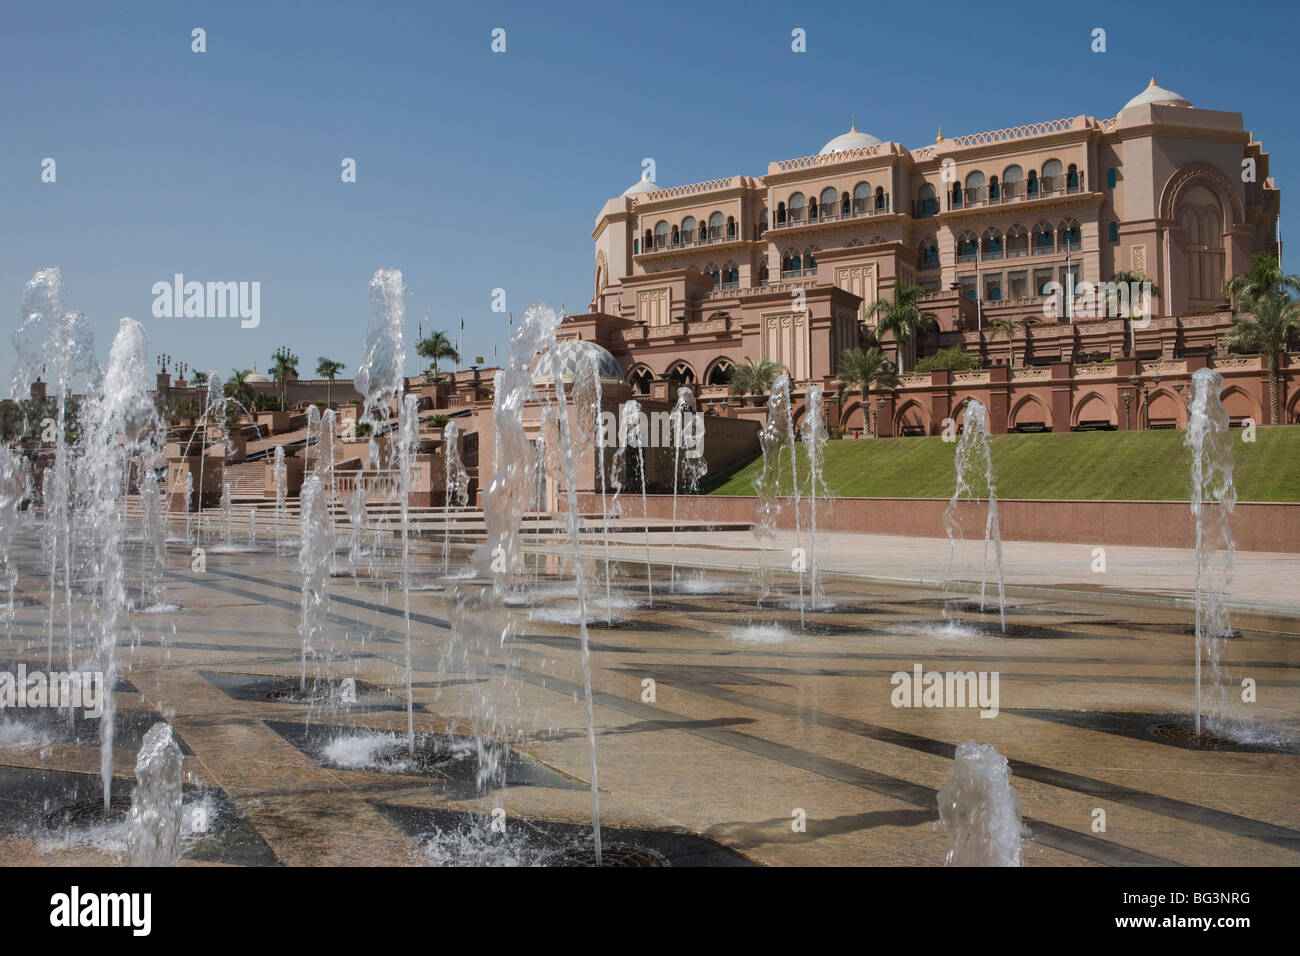 Fountains in front of the lavish Emirates Palace Hotel, Abu Dhabi, United Arab Emirates, Middle East Stock Photo